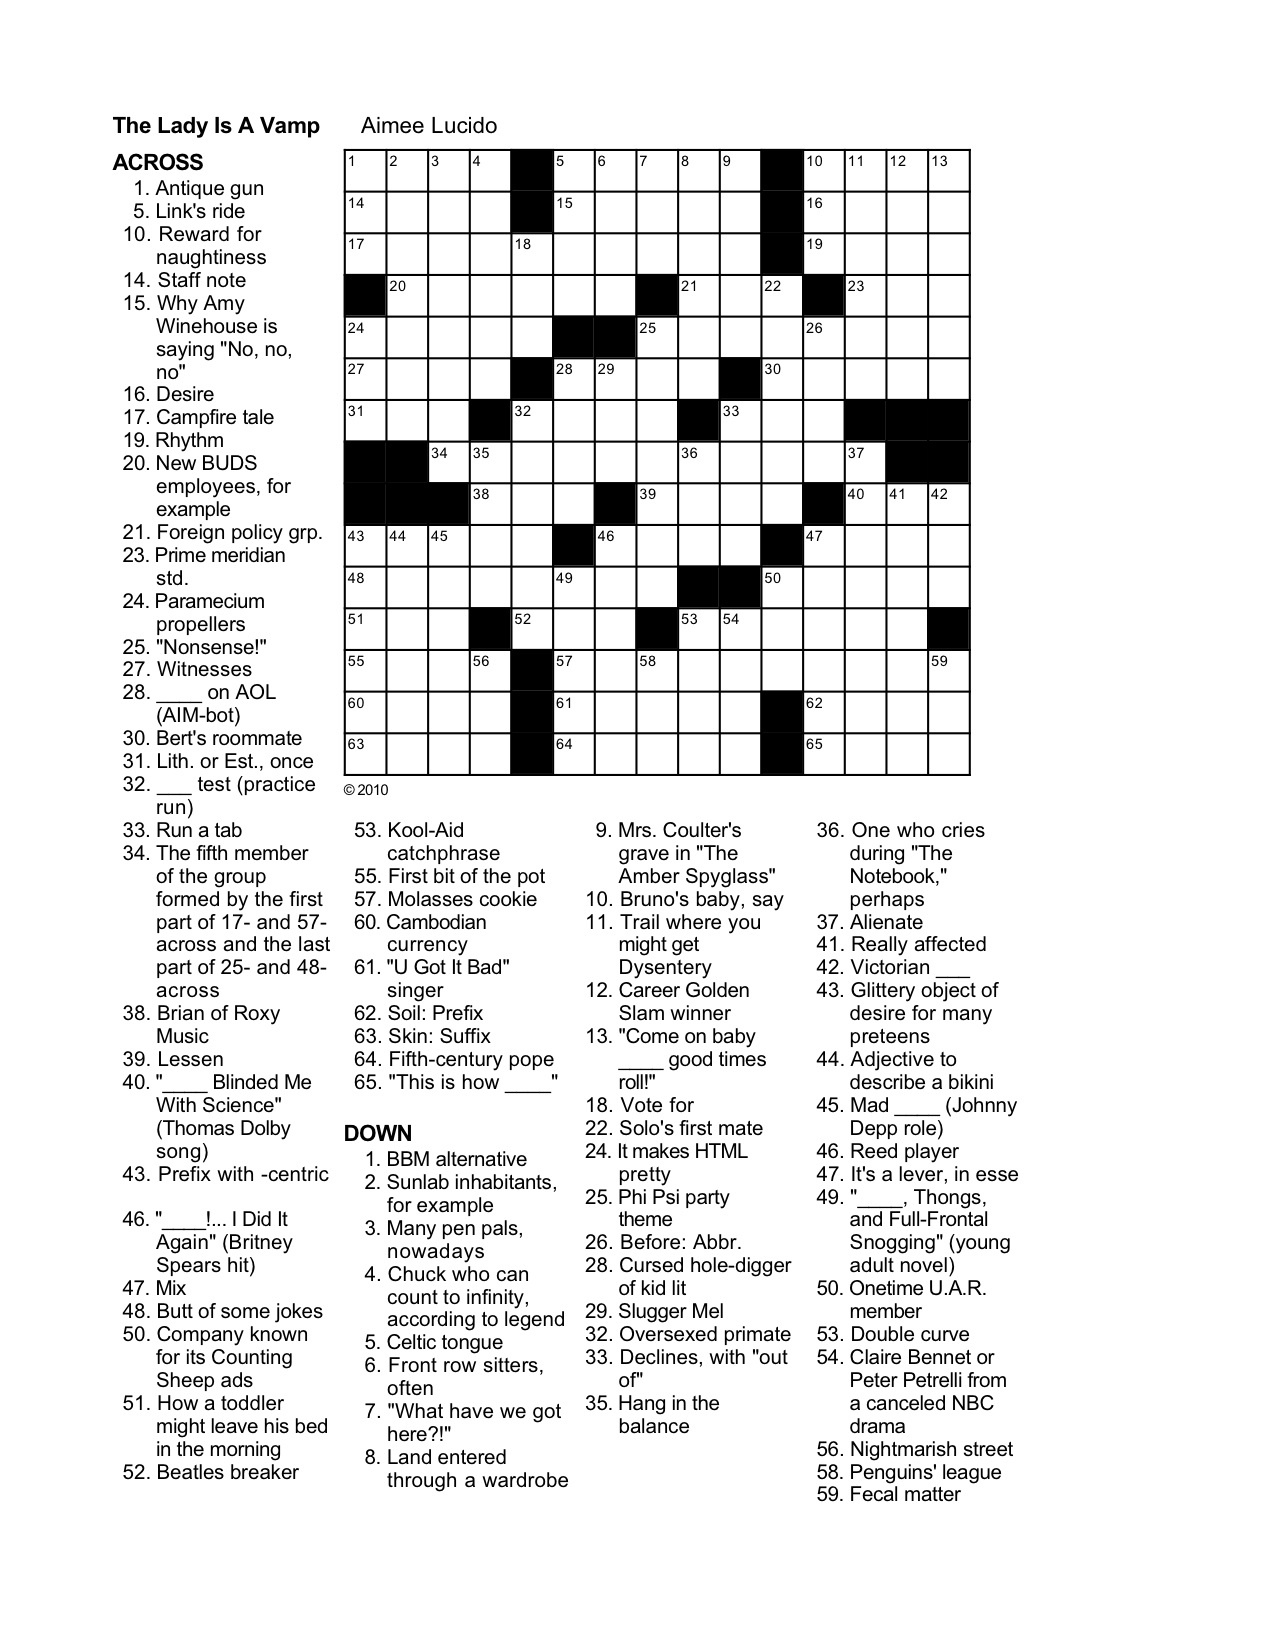 Printable La Times Crossword Puzzles Printable World Holiday